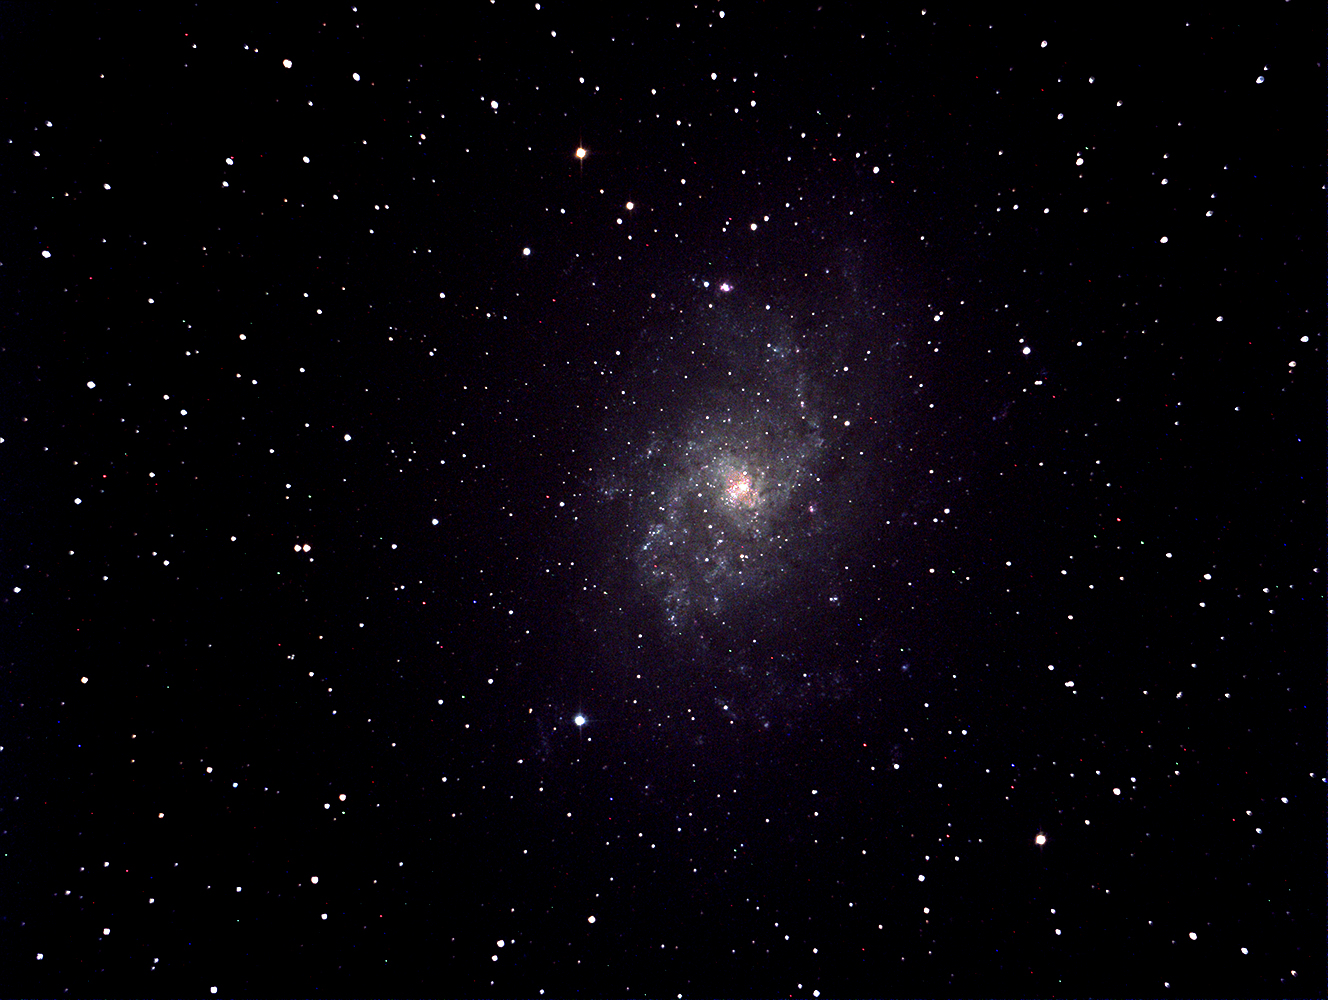 Triangulumgalaxie M33